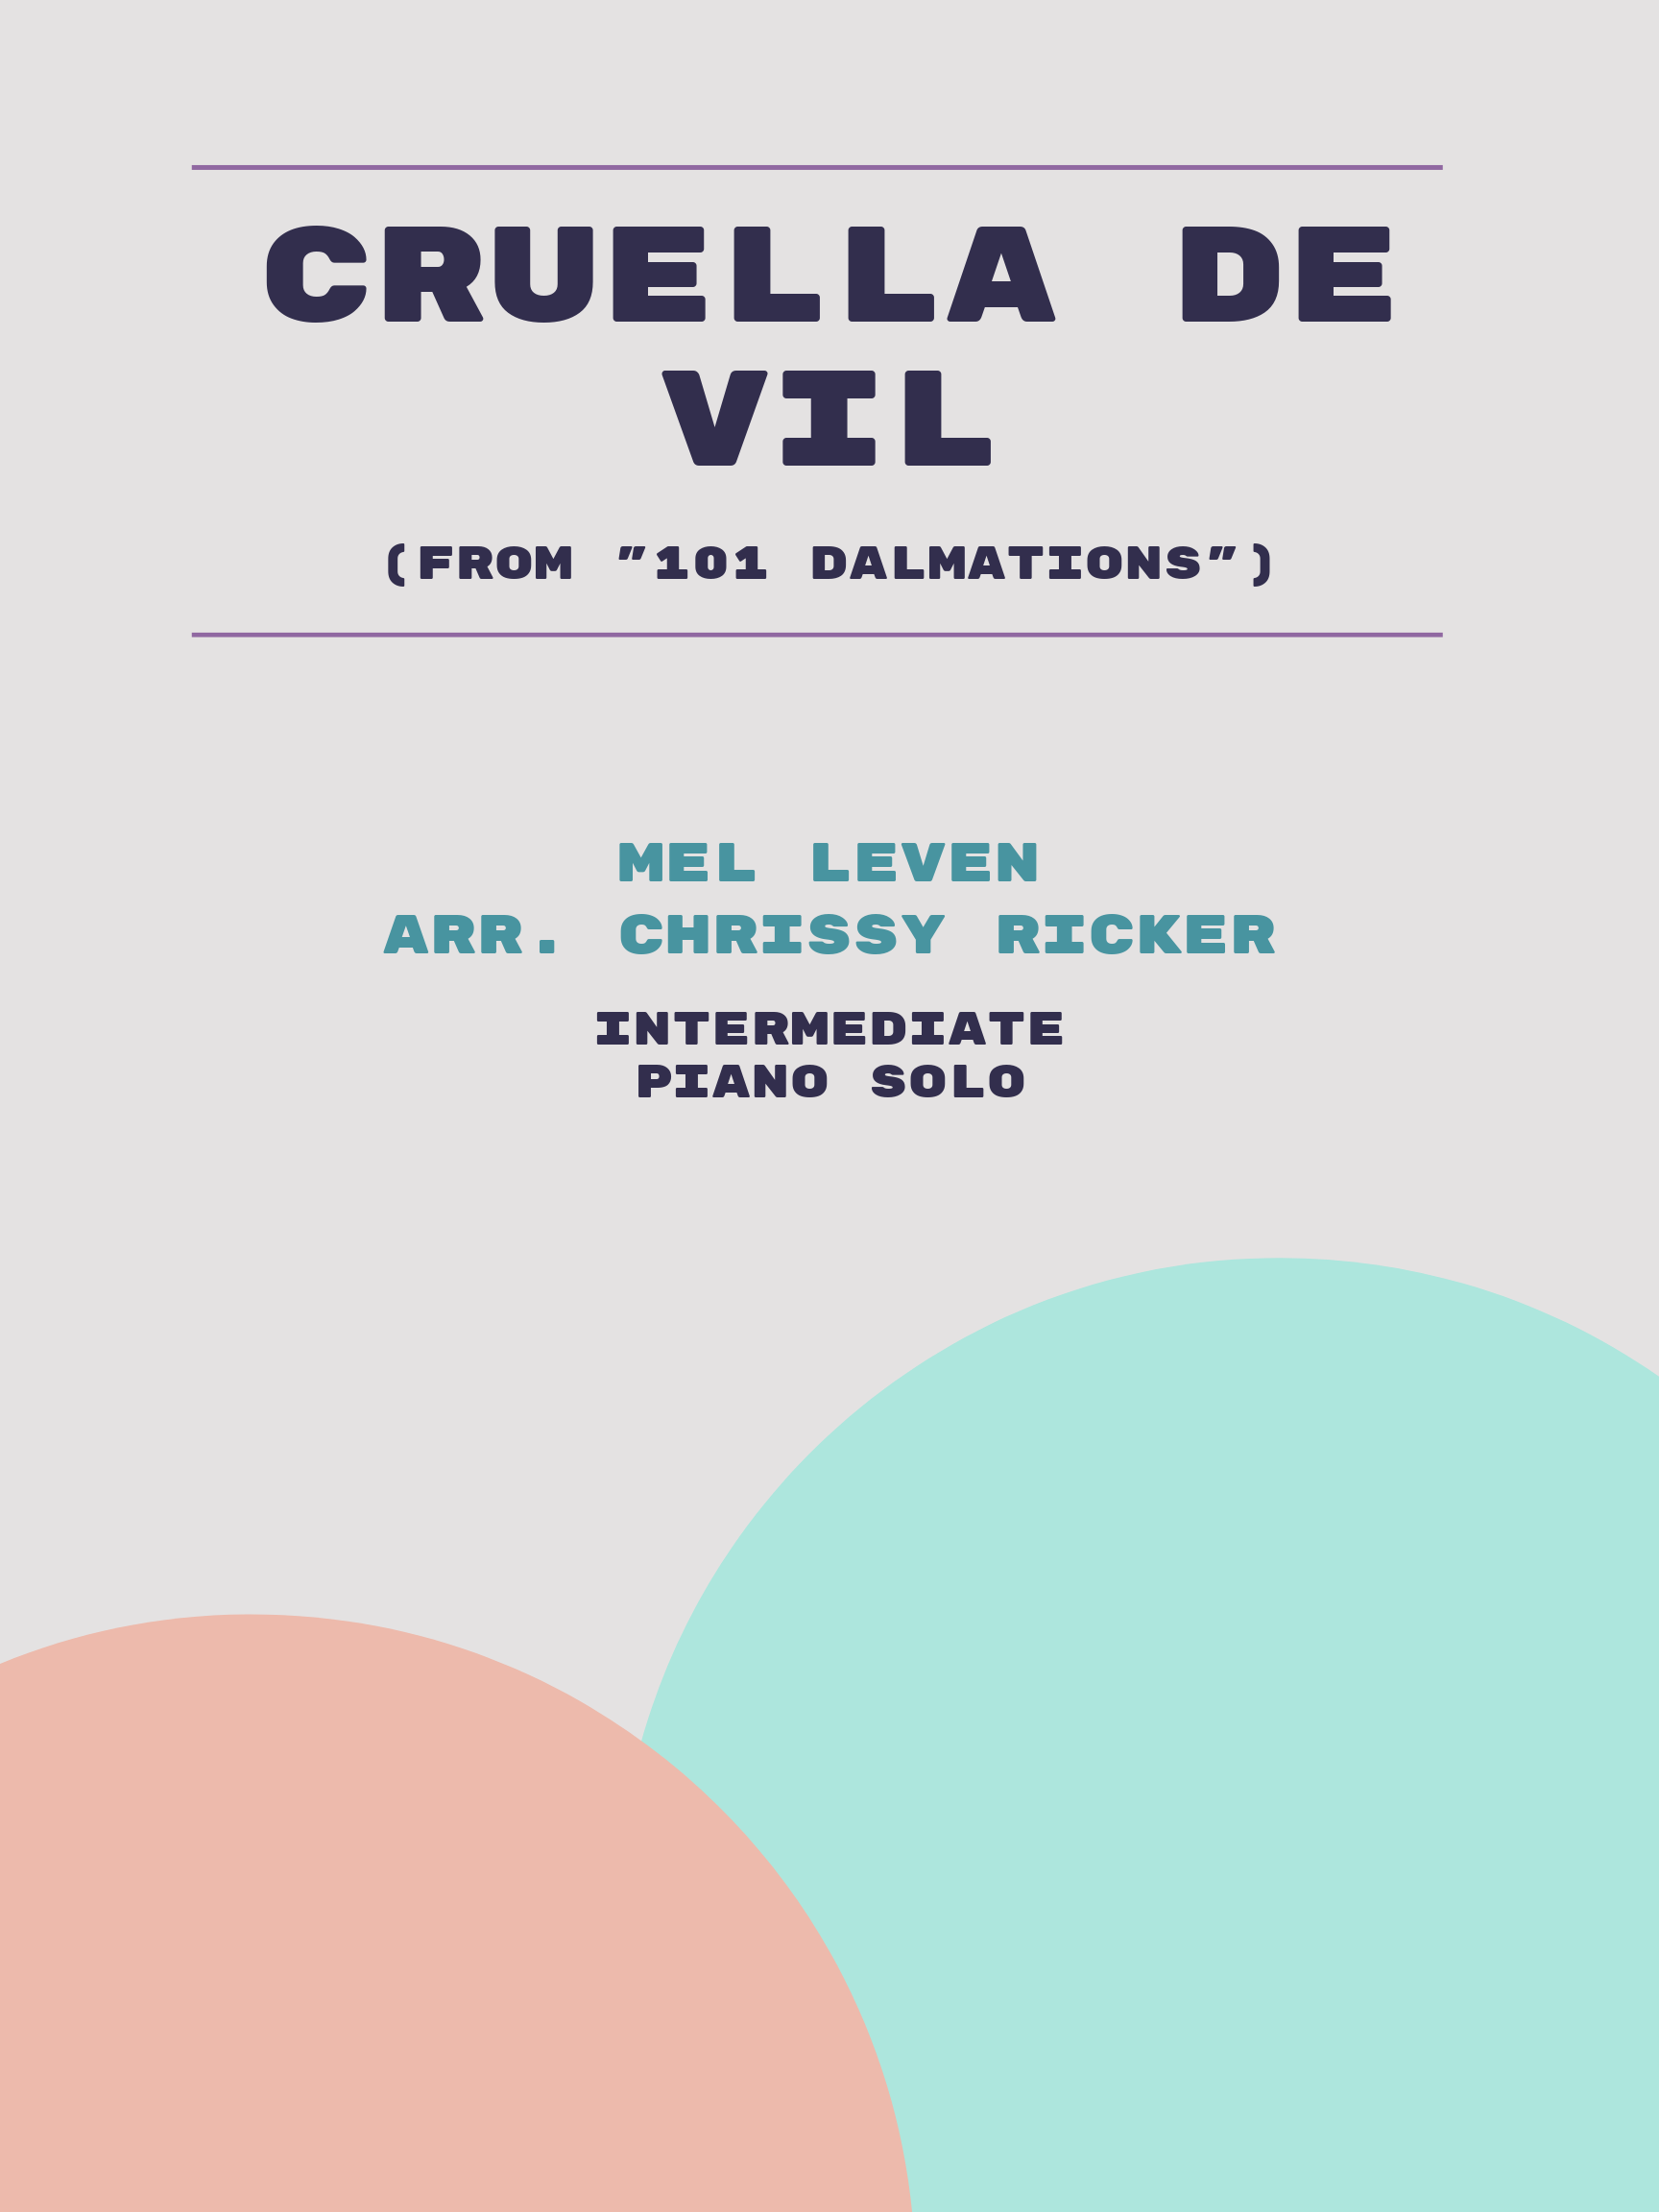 Cruella de Vil by Mel Leven